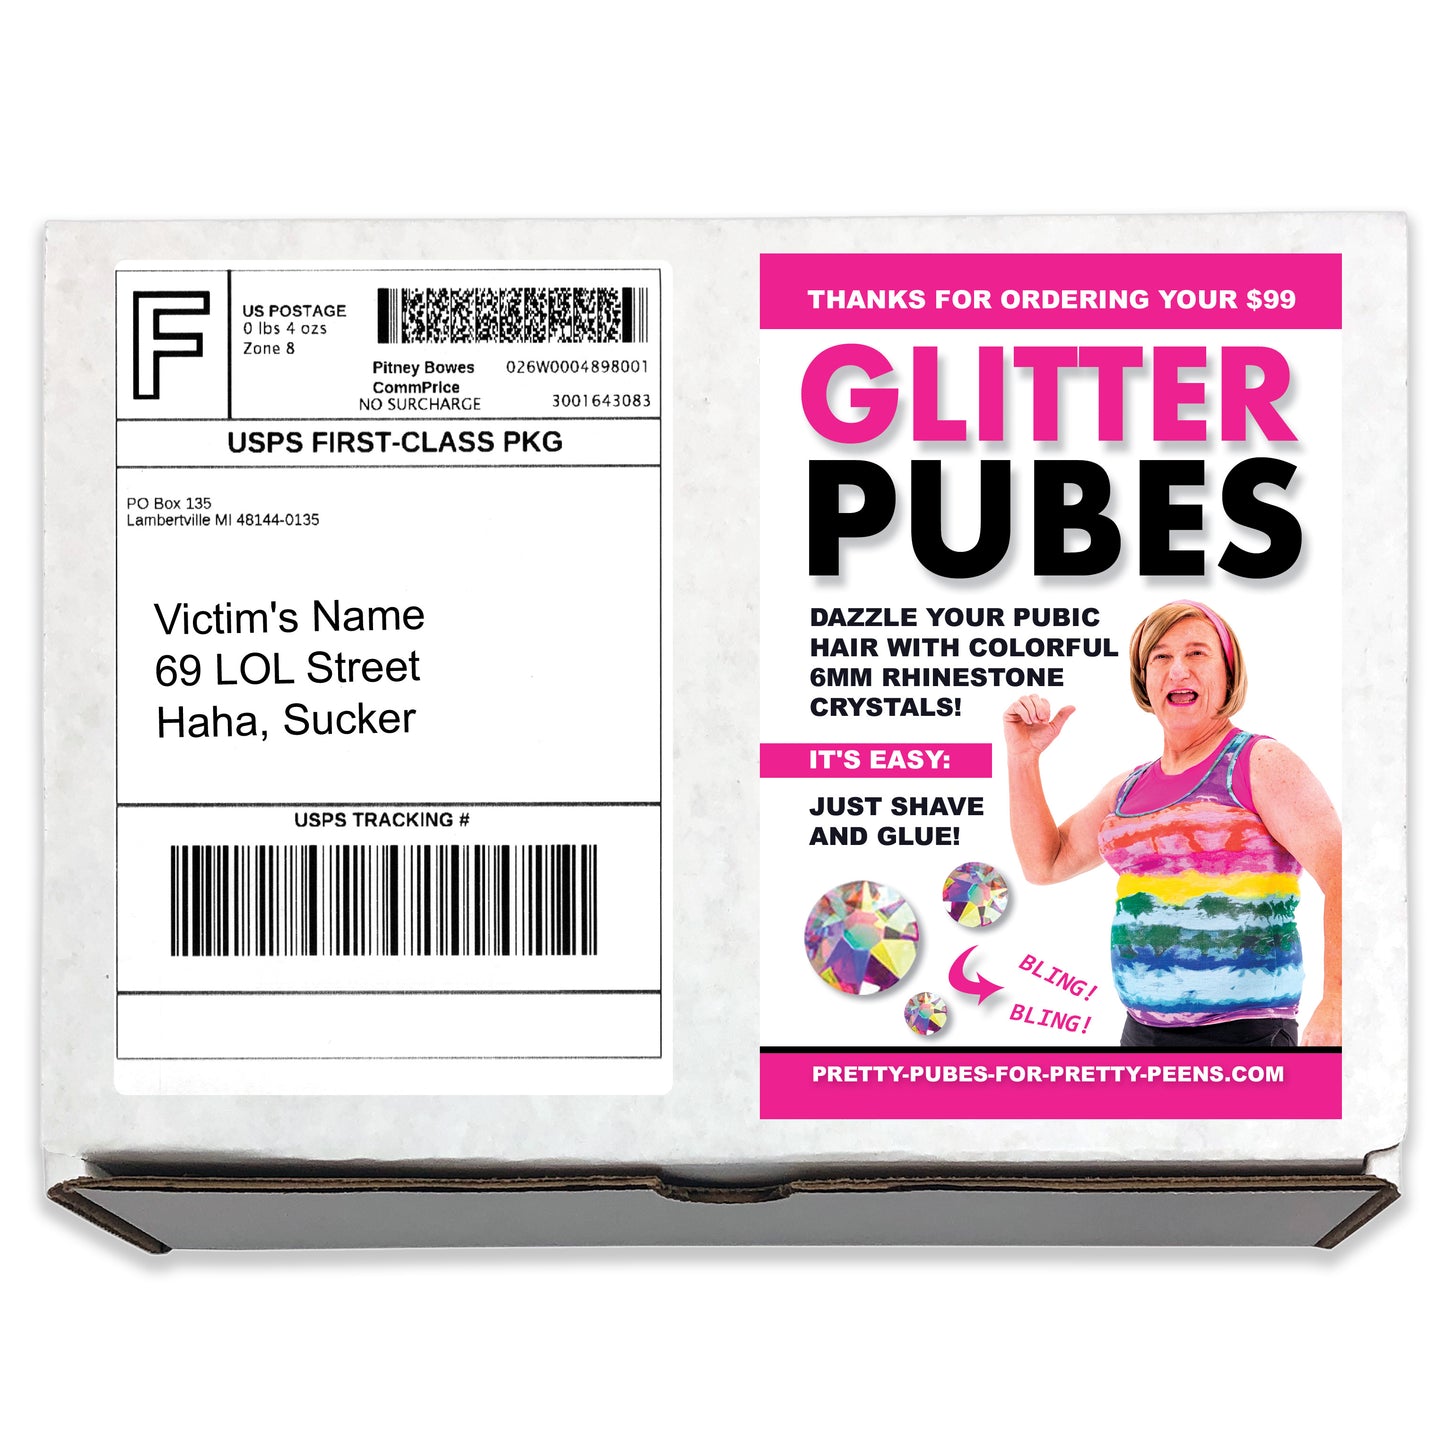 Glitter Pubes Prank Mail Box